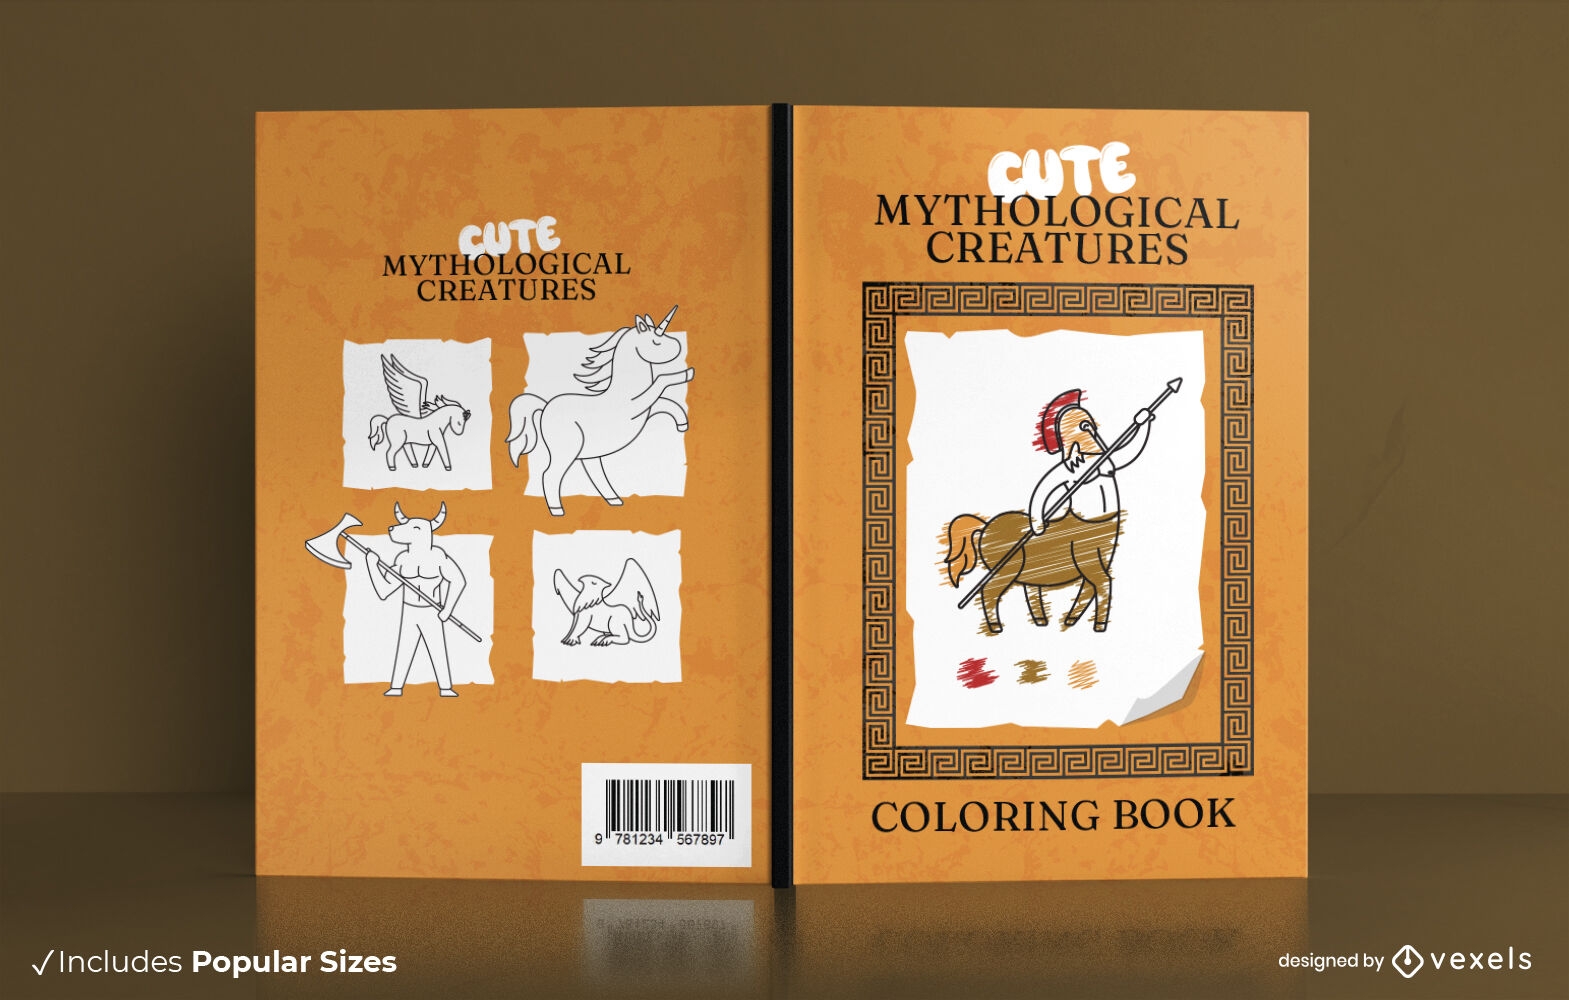 Mythological creatures book cover design